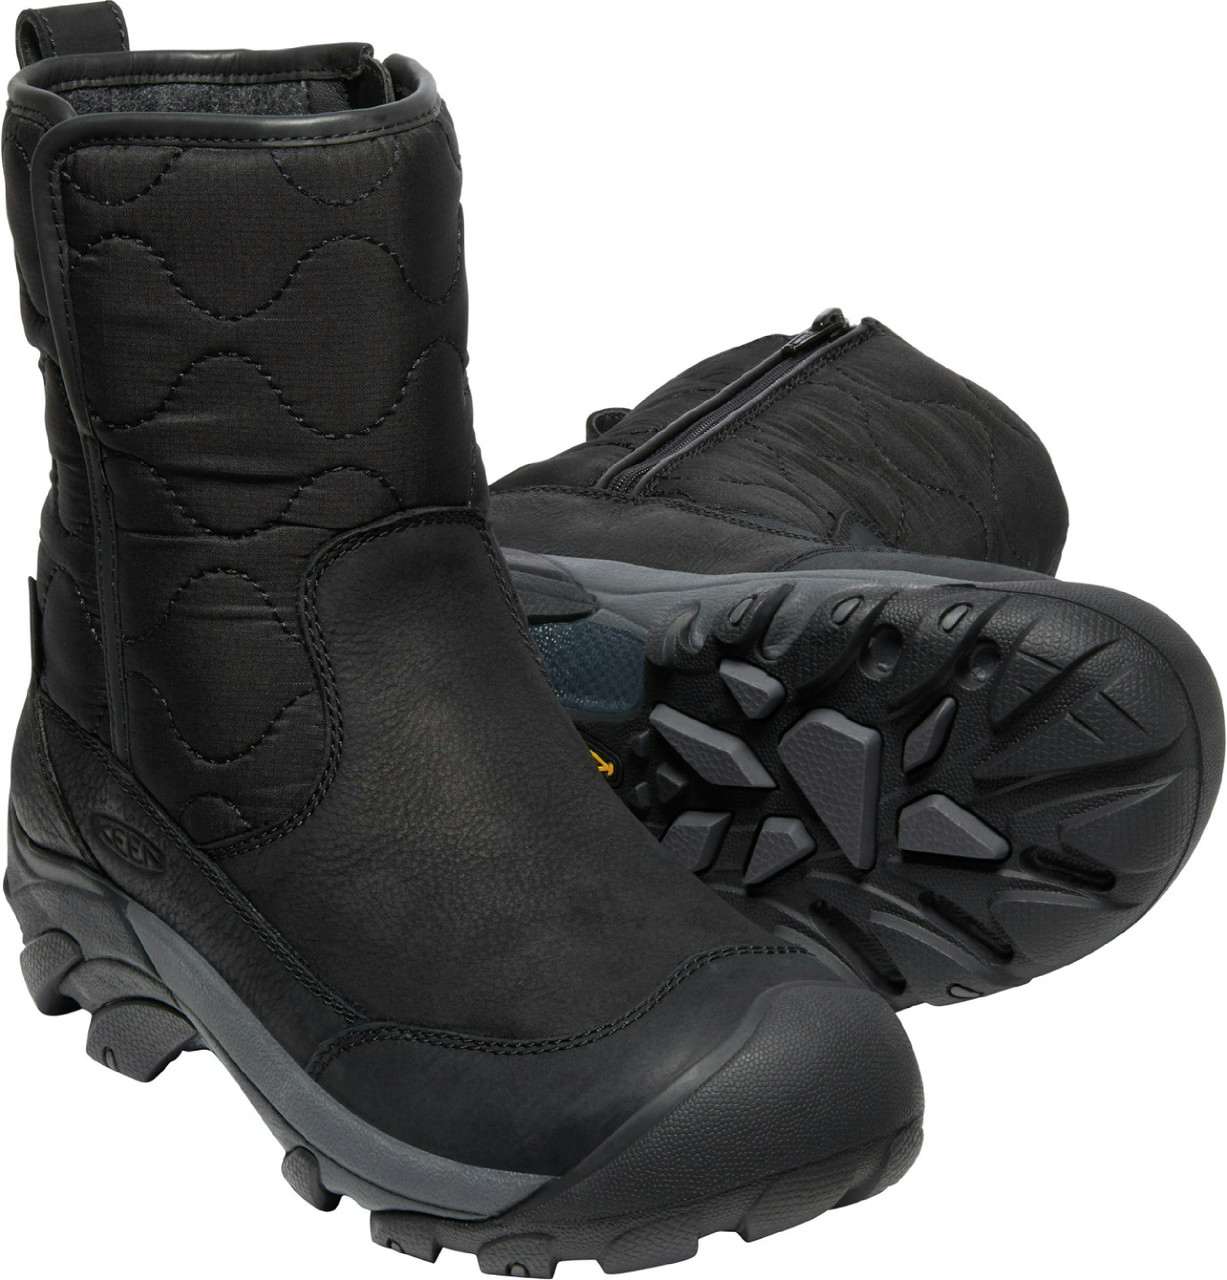 Betty Pull On Waterproof Boots Black/Black